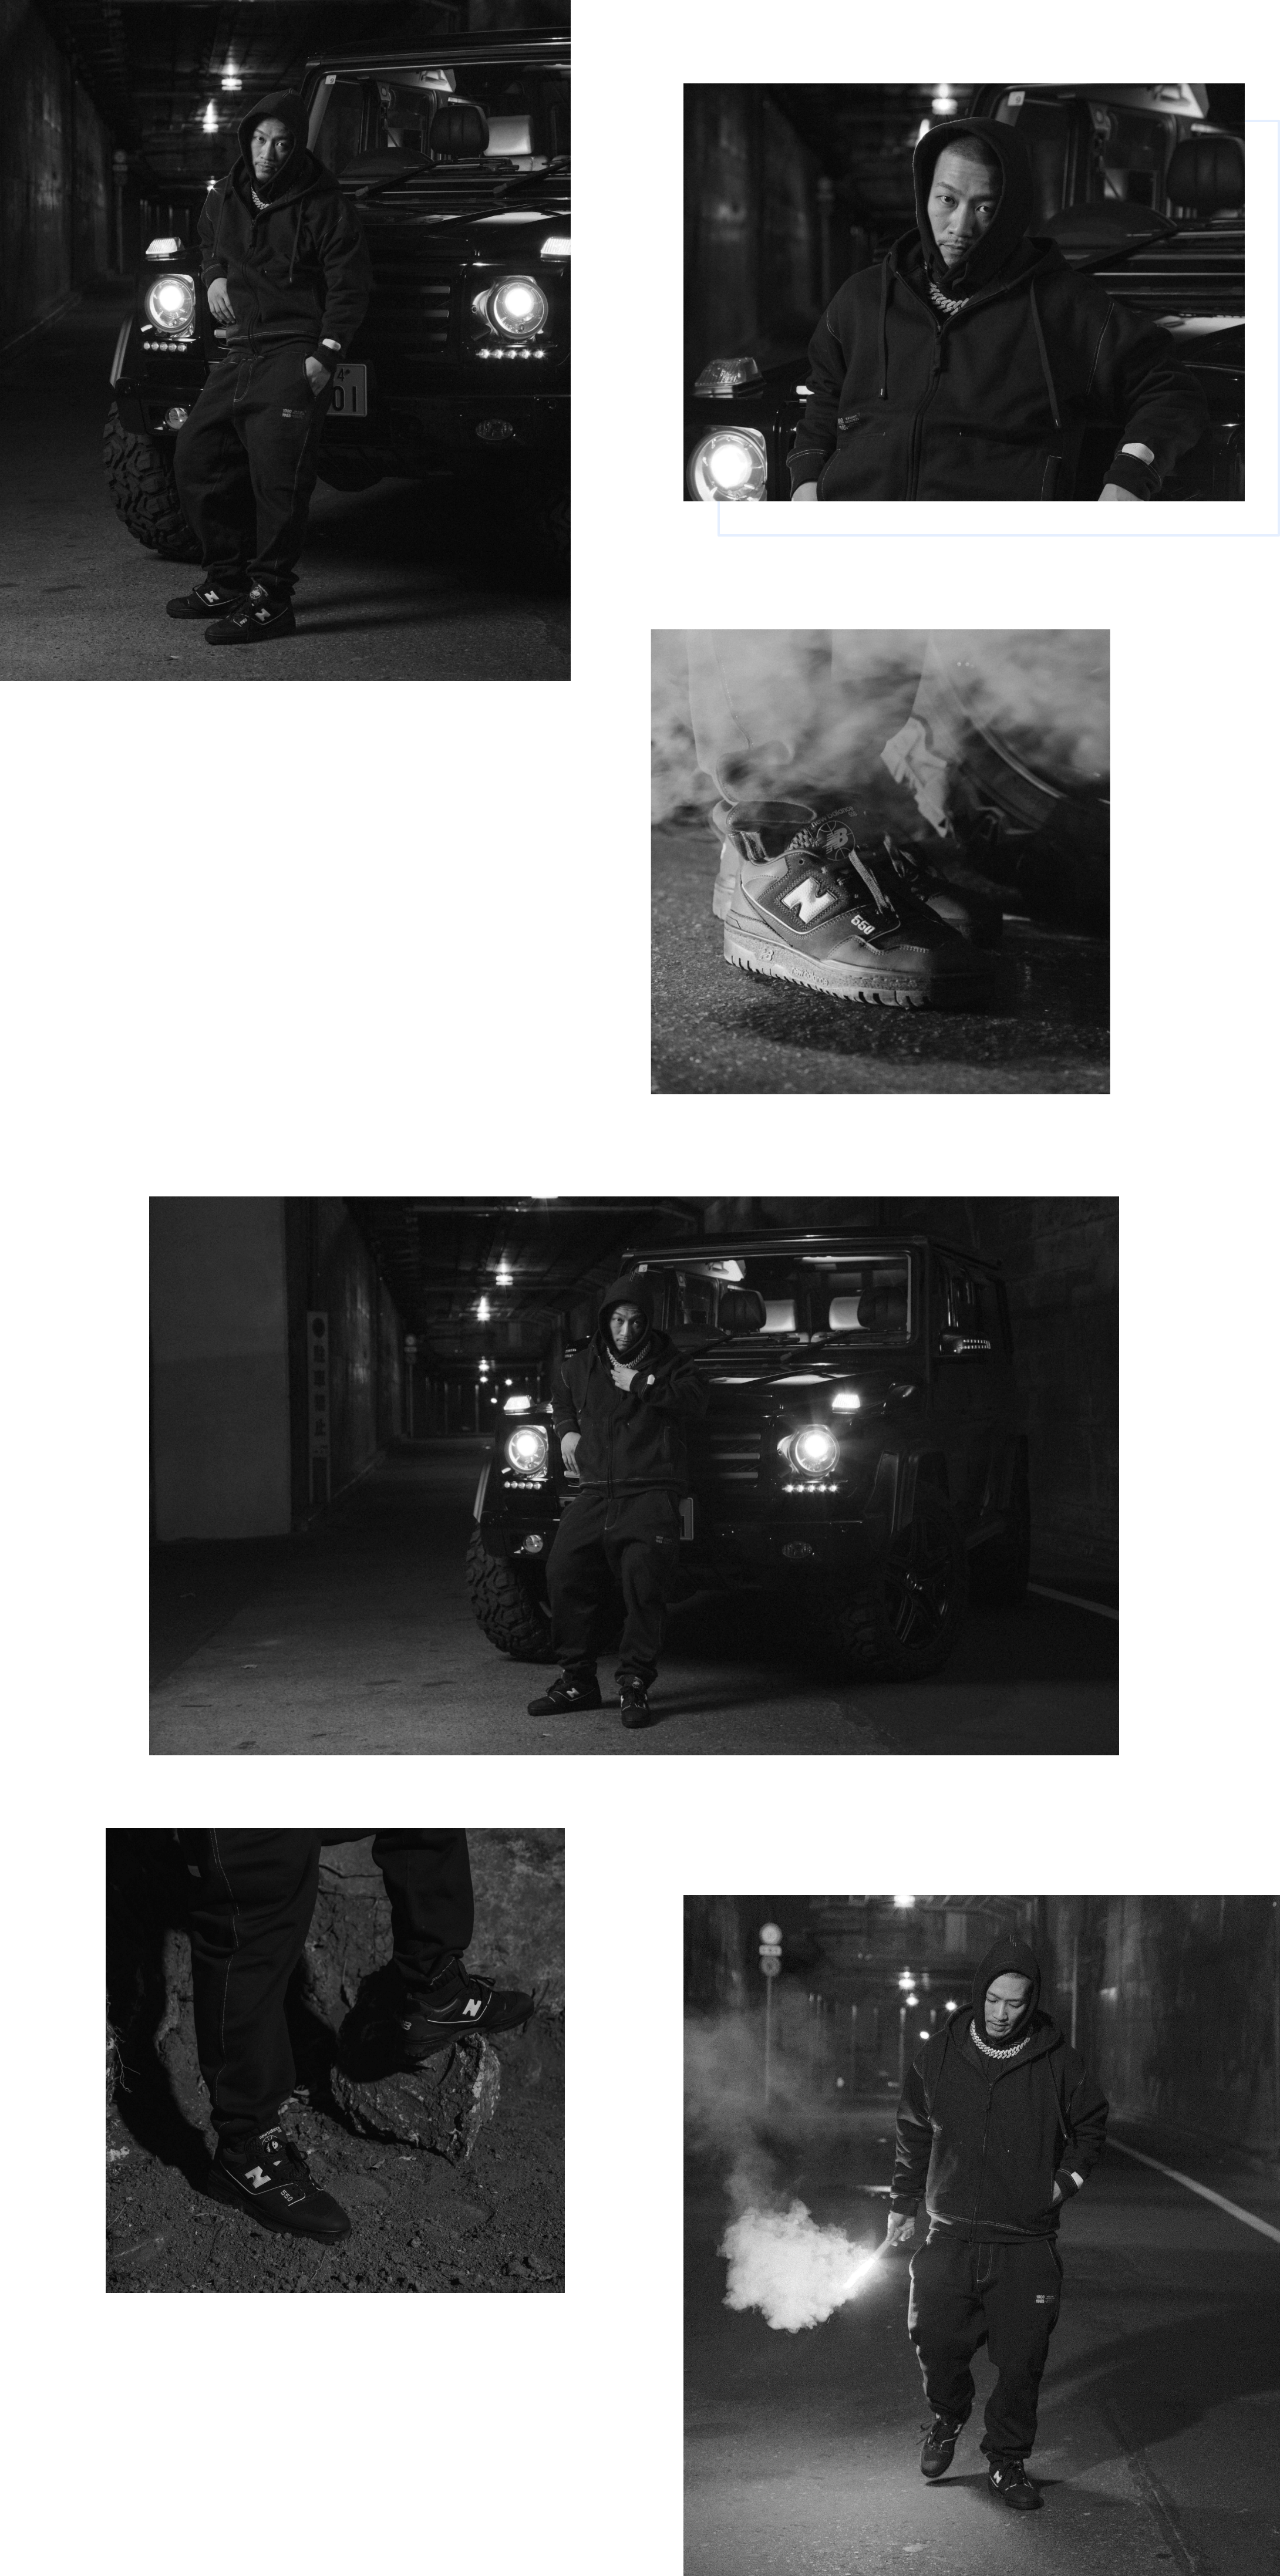 New Balance BB550ATM